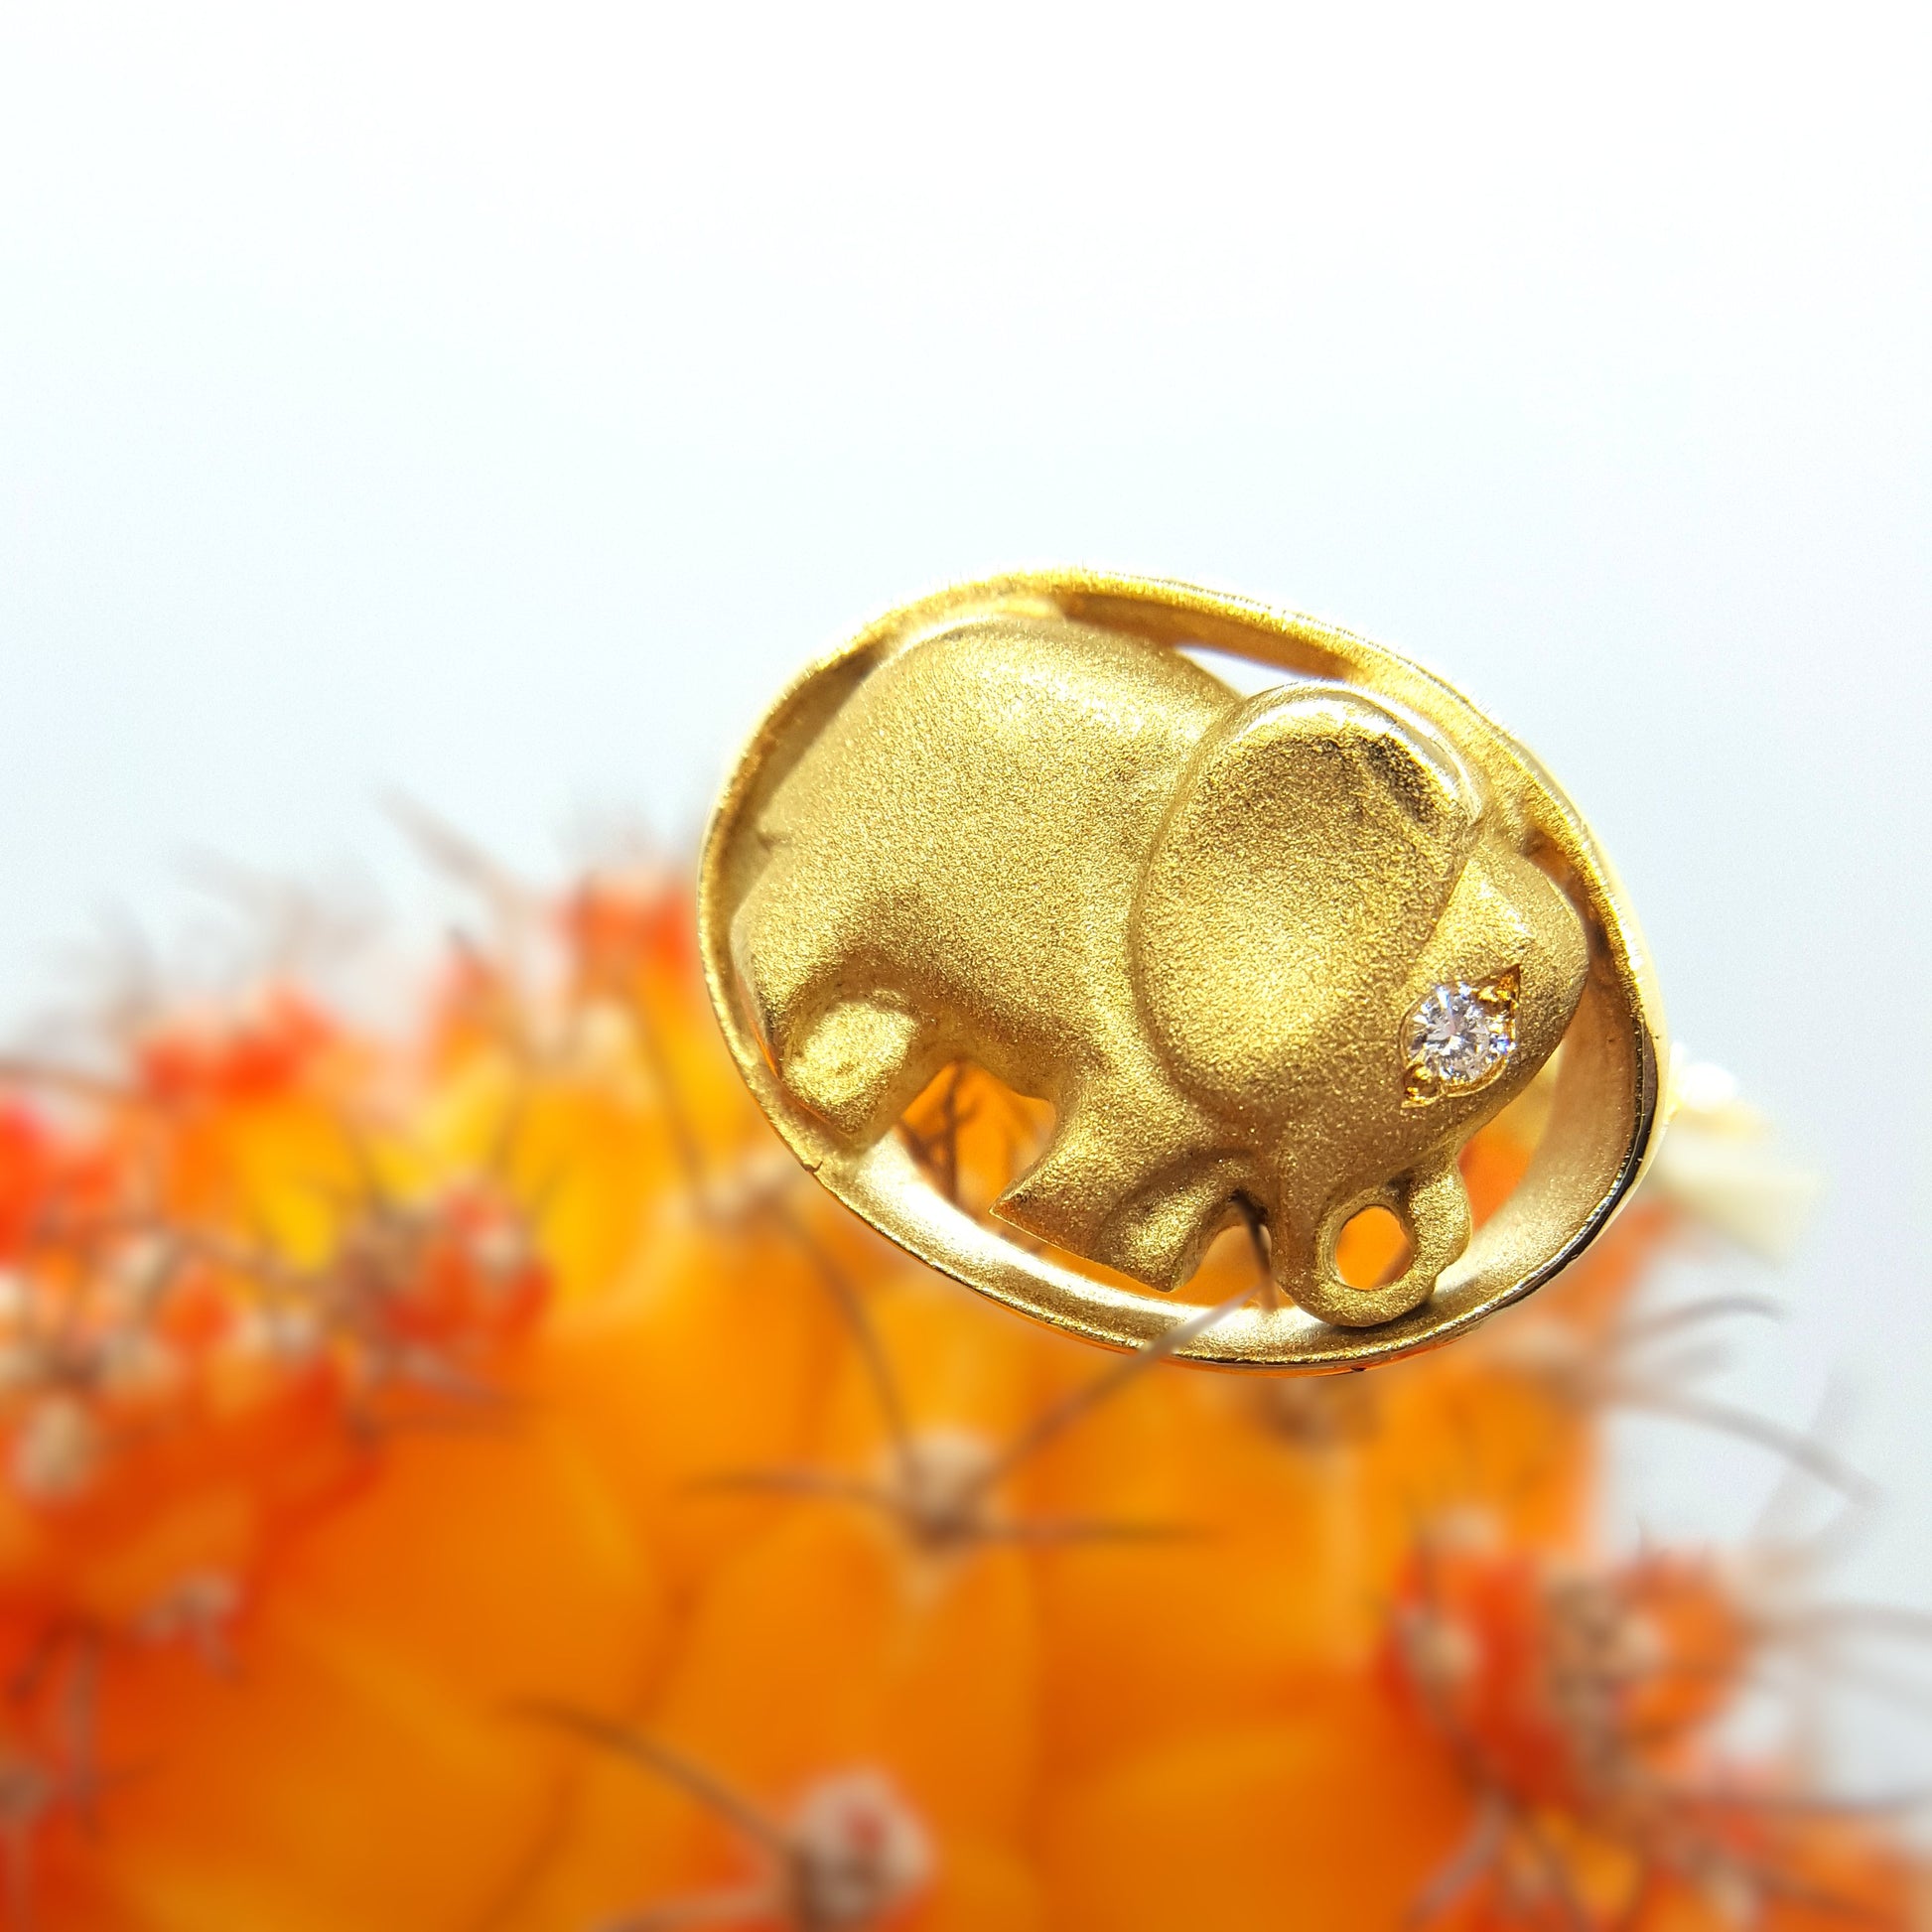 18 karat yellow gold and diamond african elephant ring